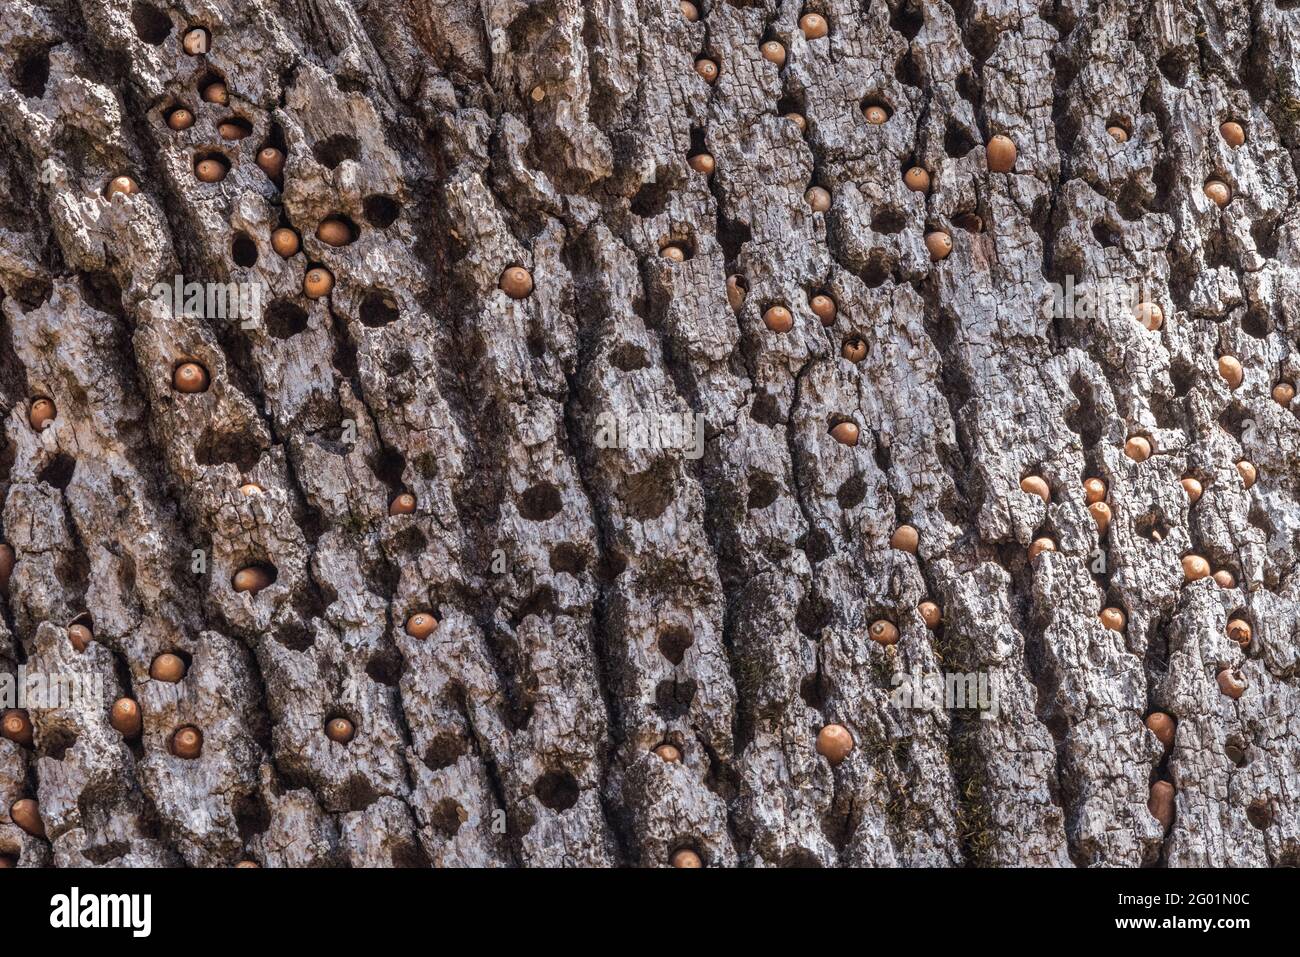 Acorn woodpeckers (Melanerpes formicivorus) store acorns in holes in bark in granary trees. Stock Photo